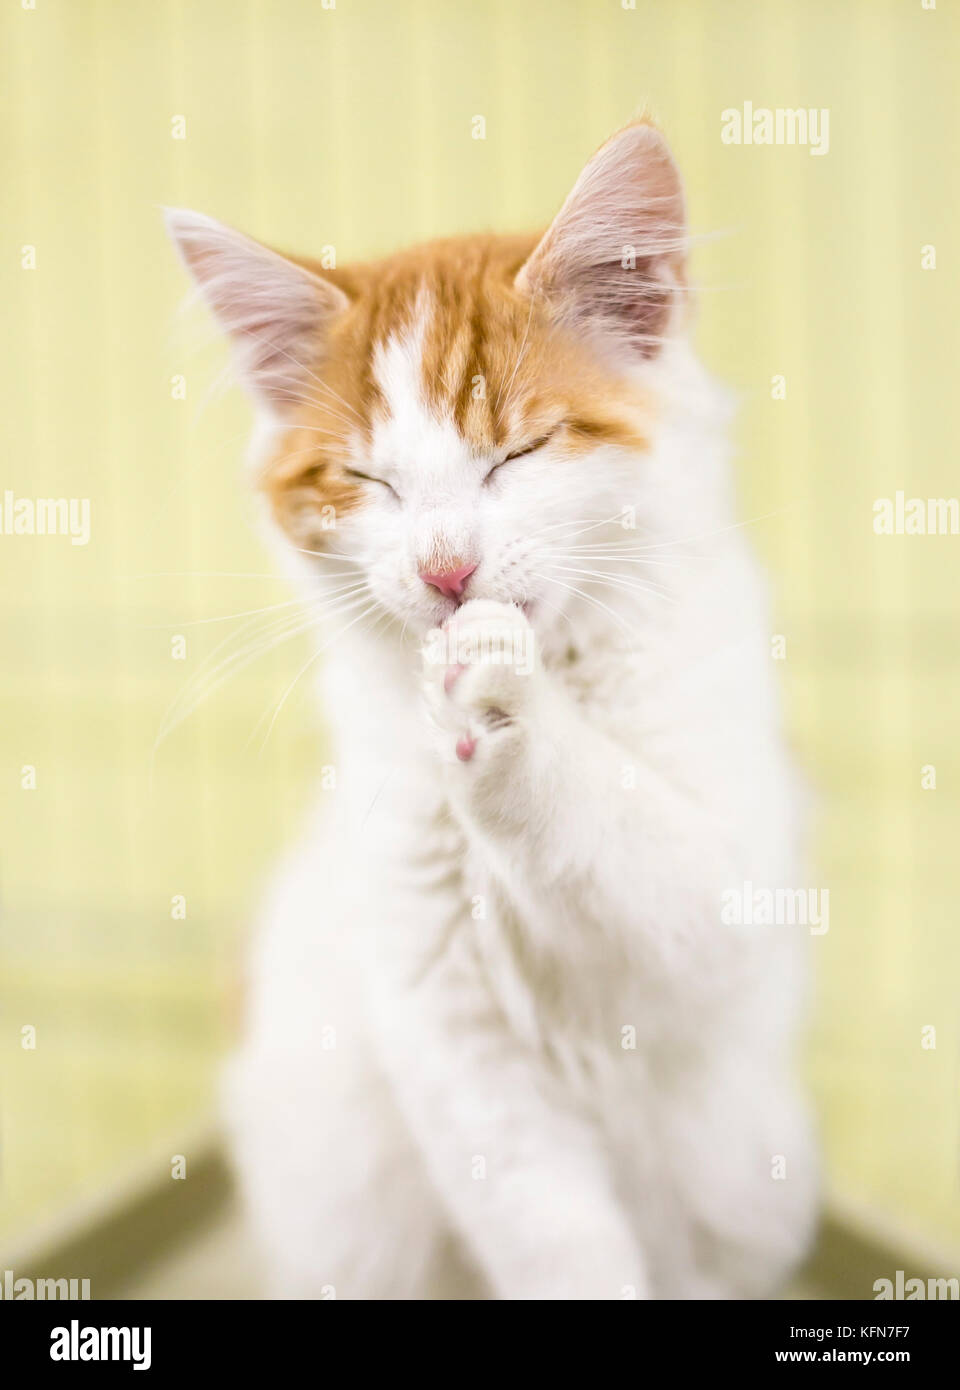 A white kitten with orange tabby markings grooming itself Stock Photo